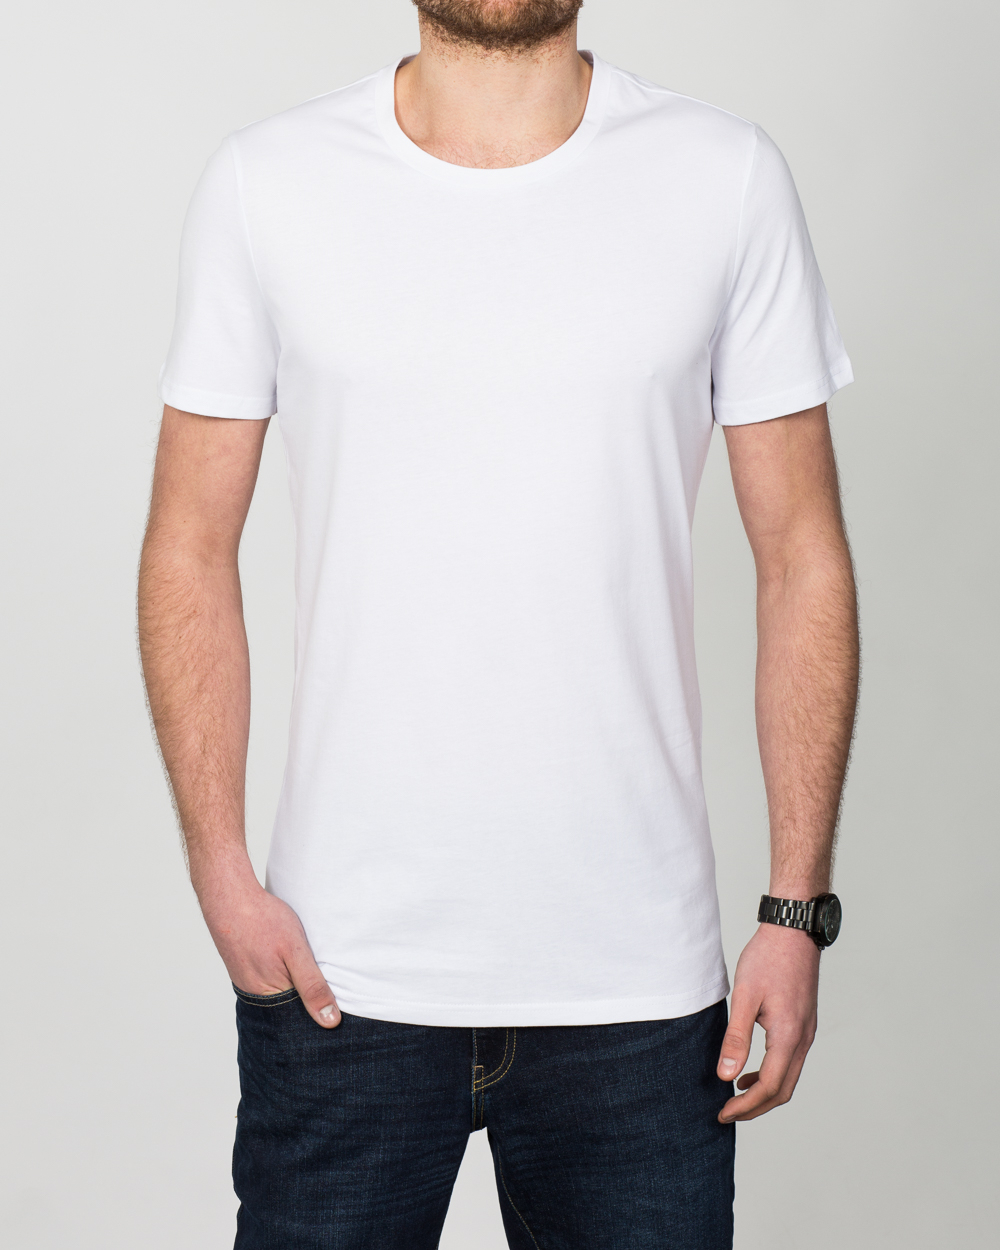 2t Tall T-Shirt (white) | 2tall.com